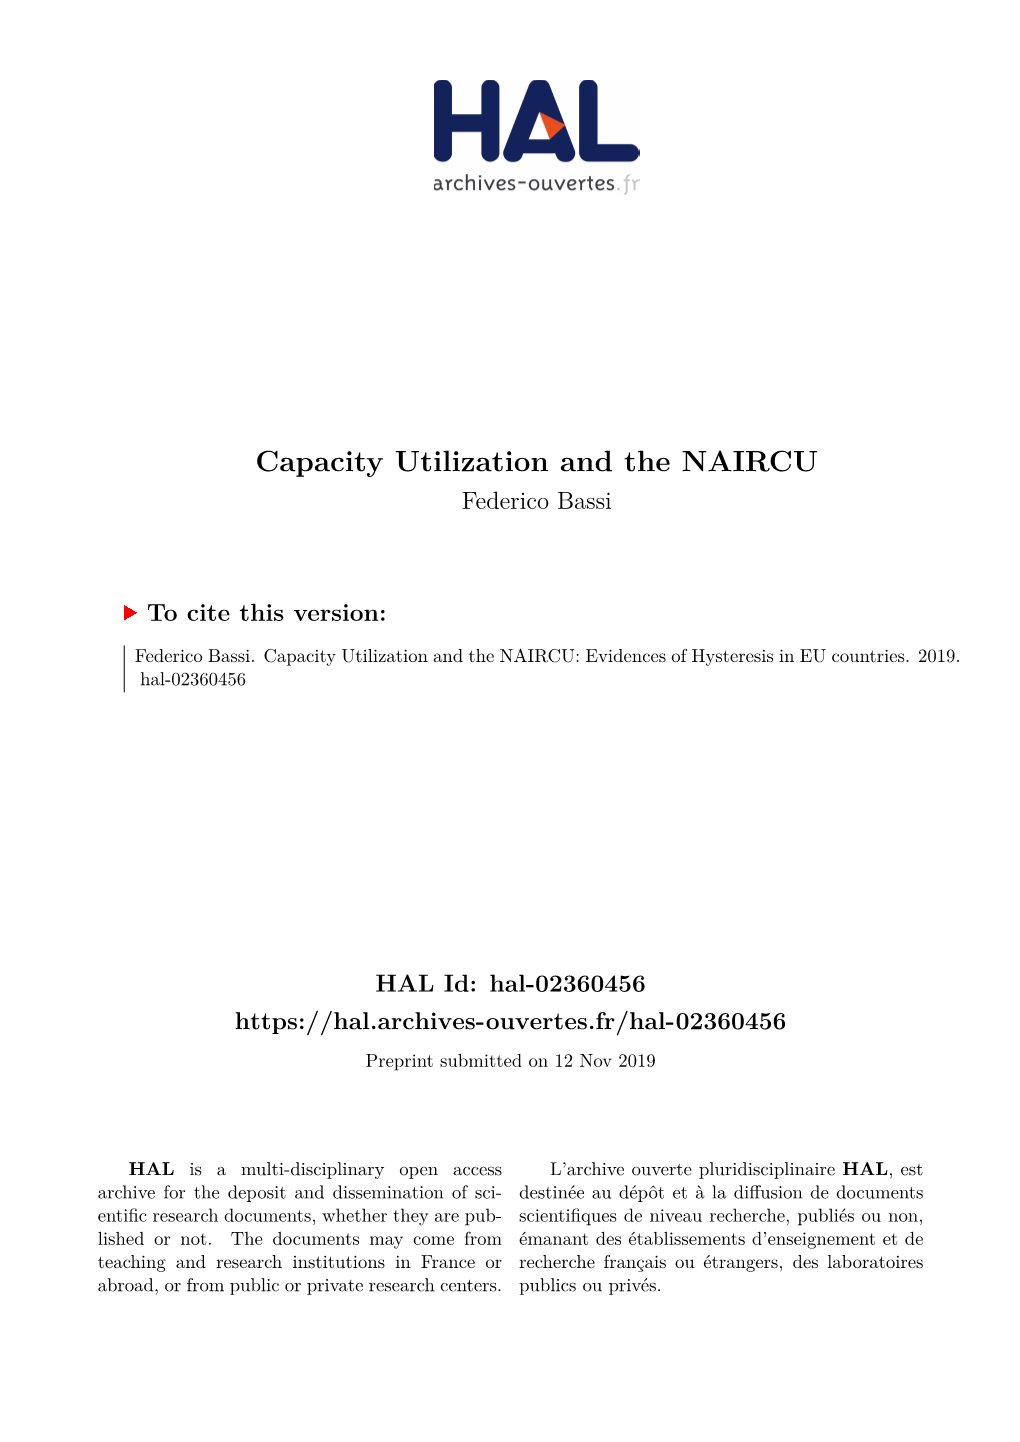 Capacity Utilization and the NAIRCU Federico Bassi